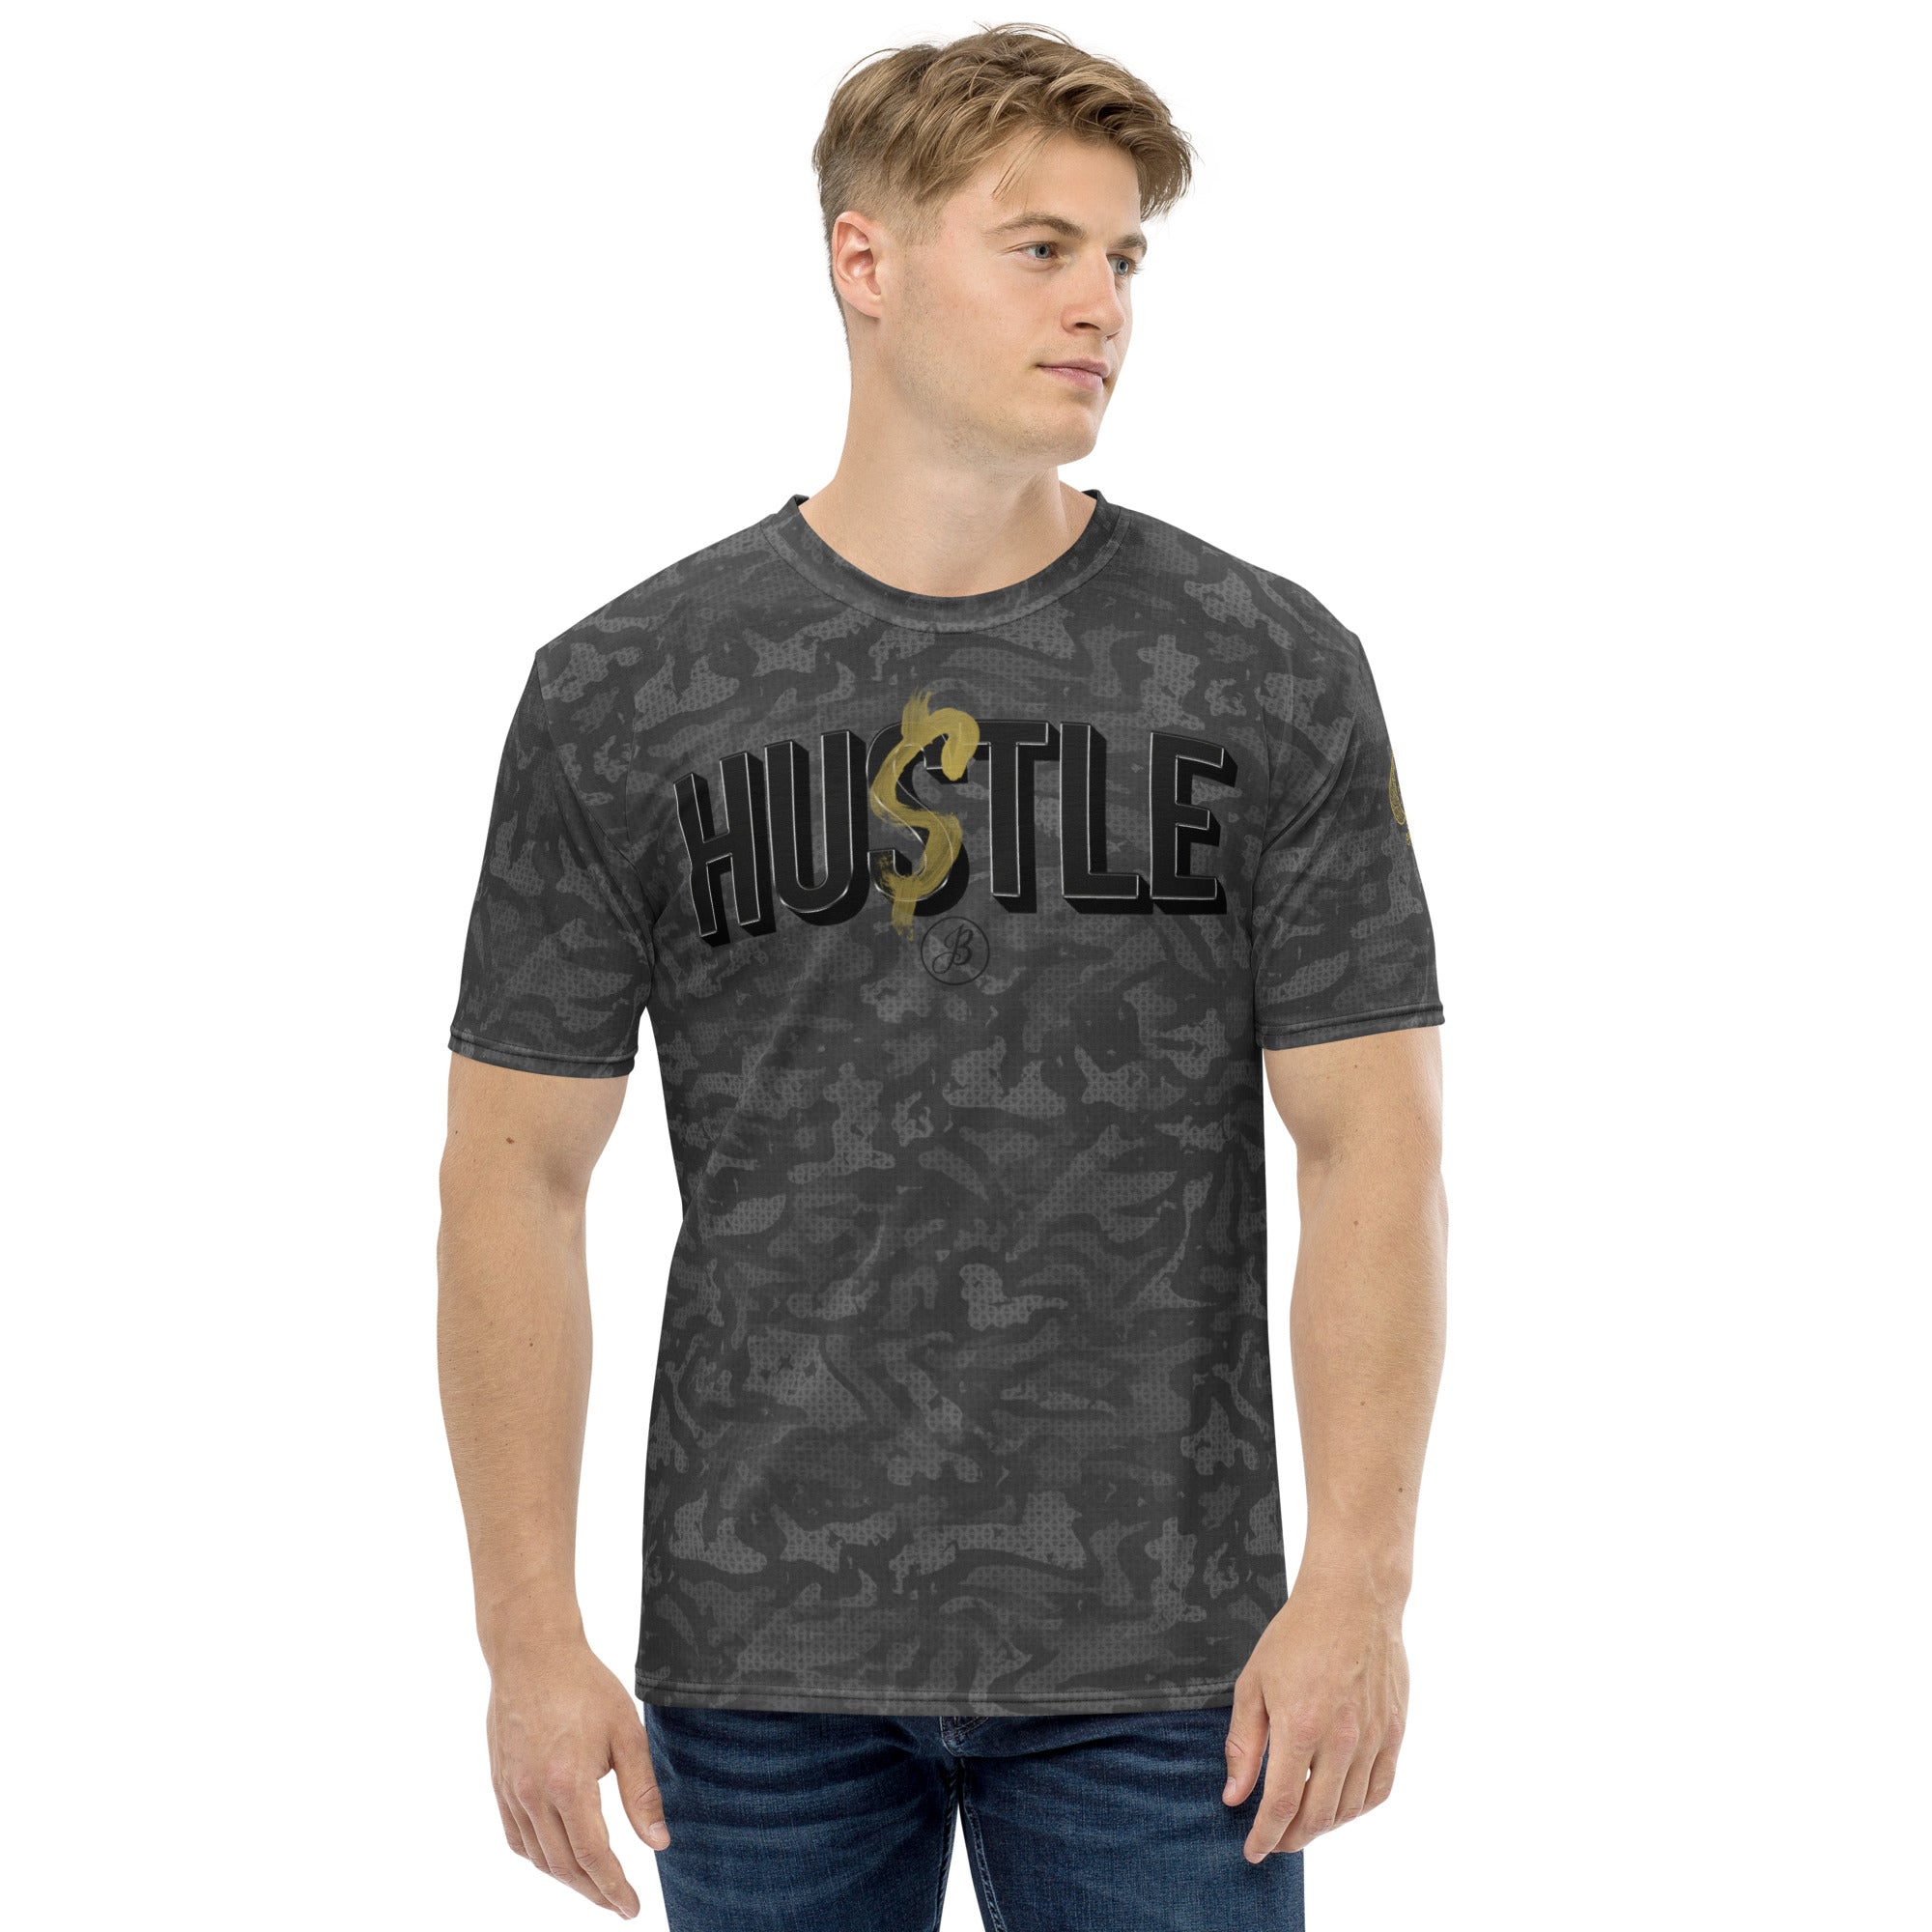 Hustle Camo Men's t-shirt